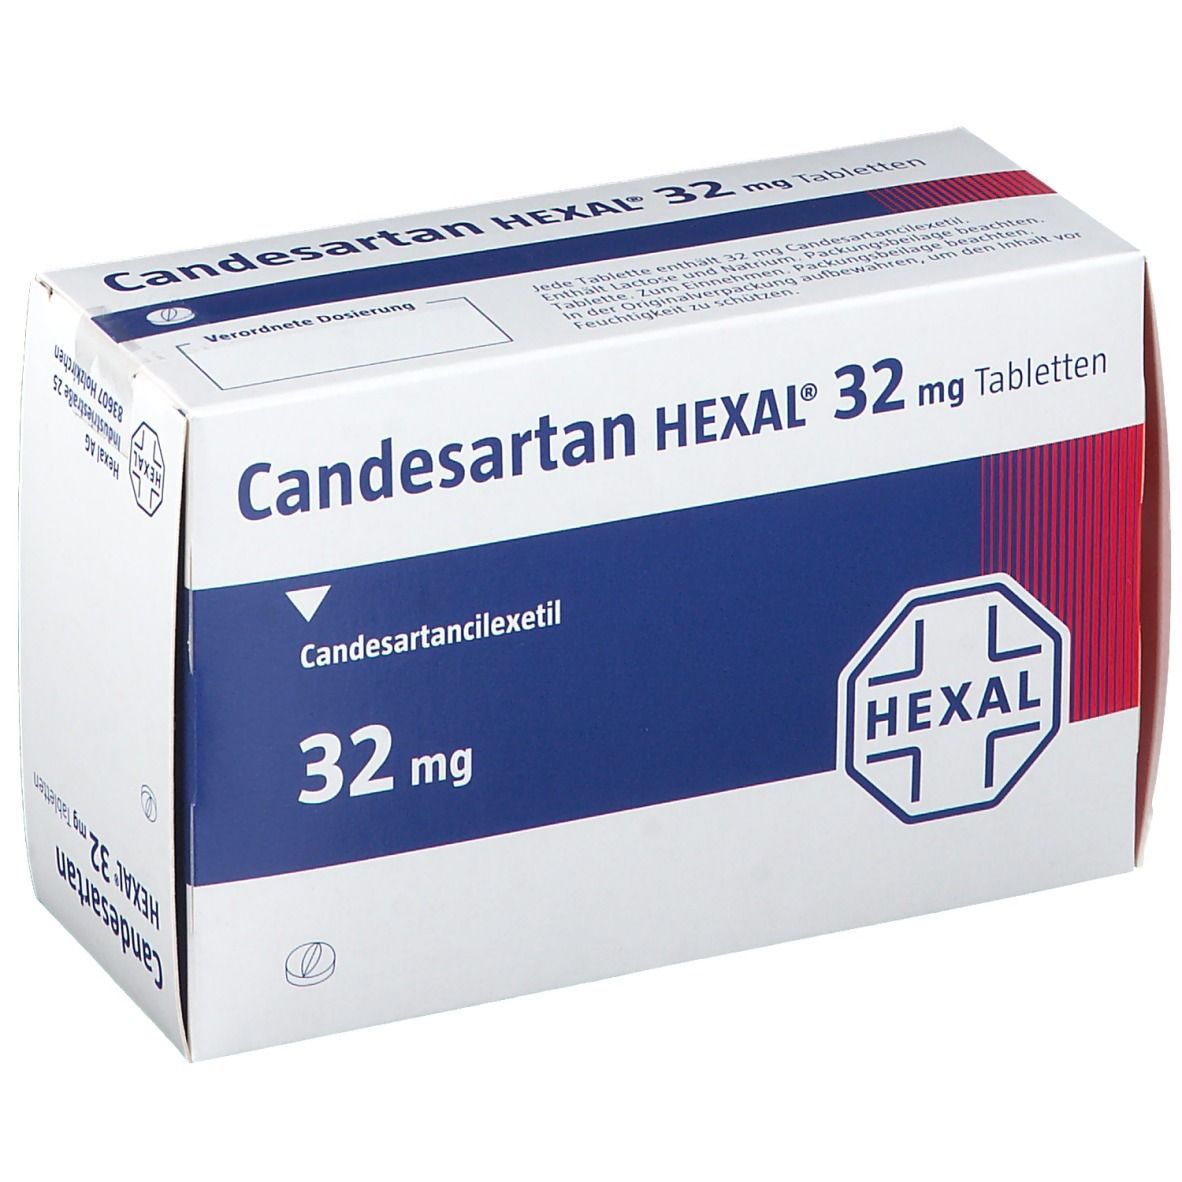 Candesartan HEXAL® 32 mg